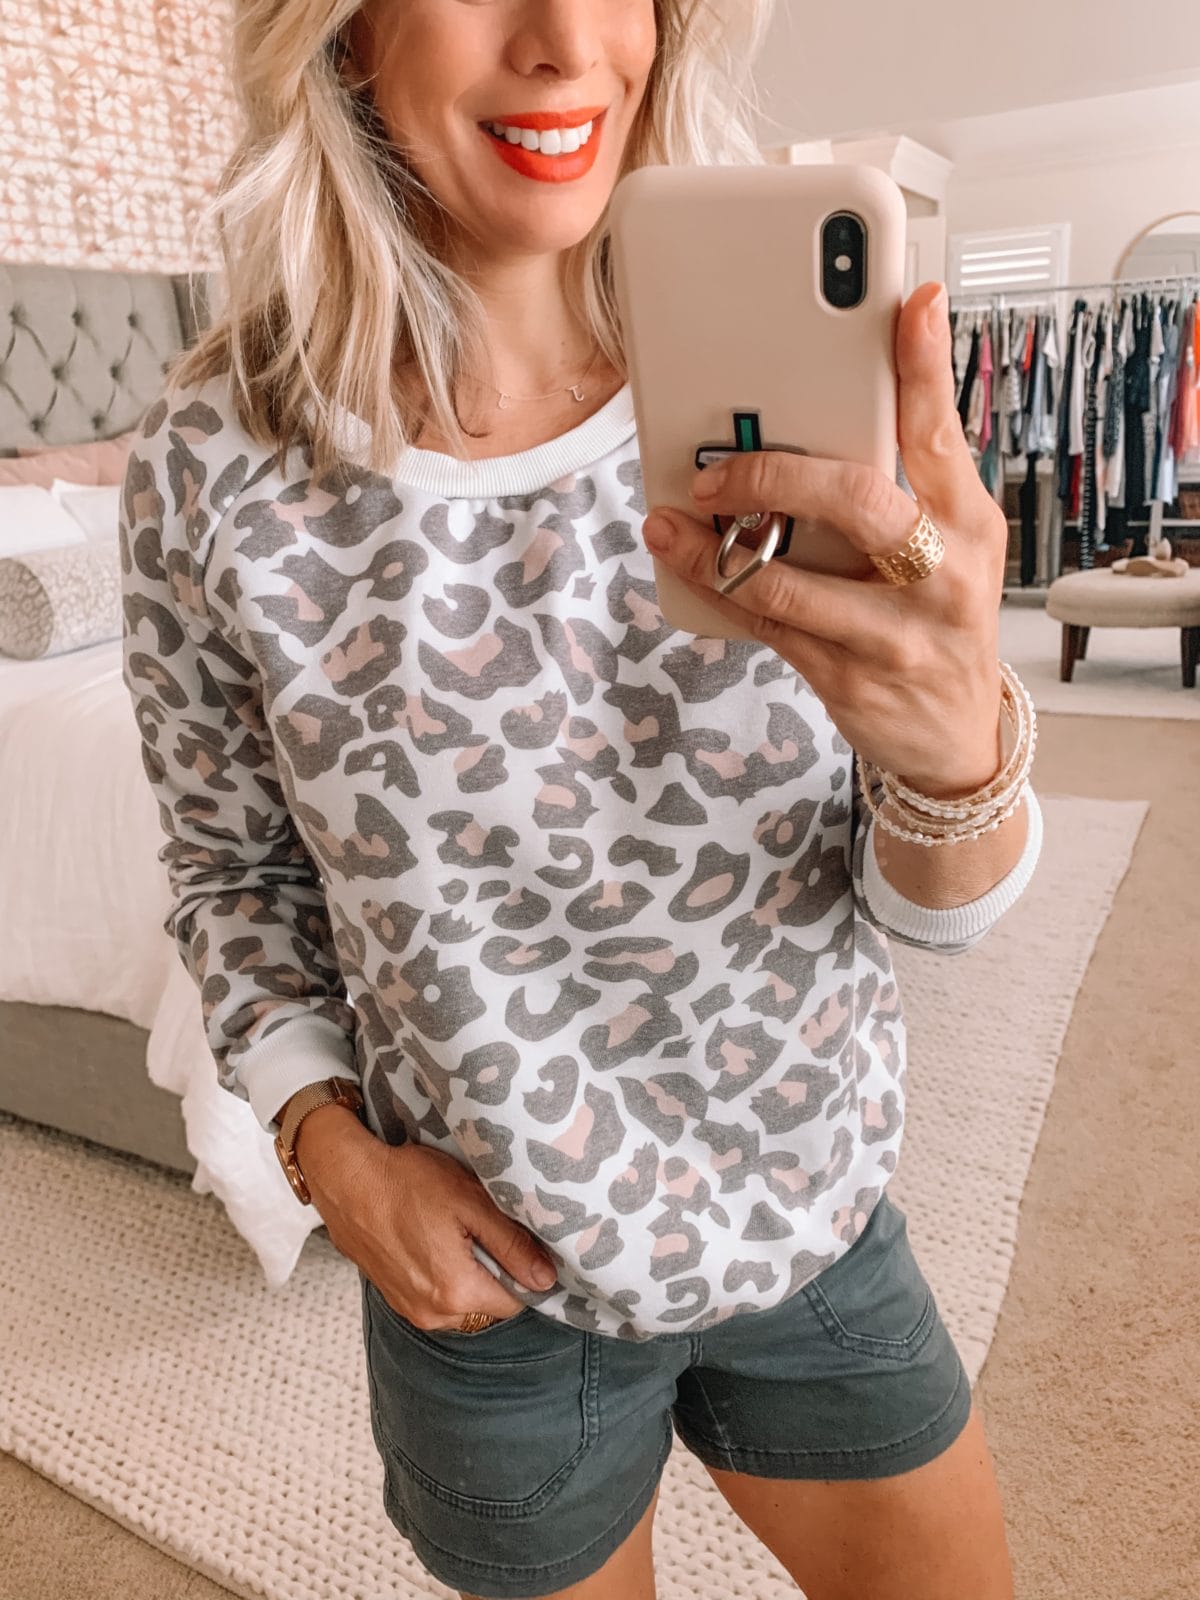 Amazon Fashion Finds, Leopard Sweatshirt, Board Shorts 